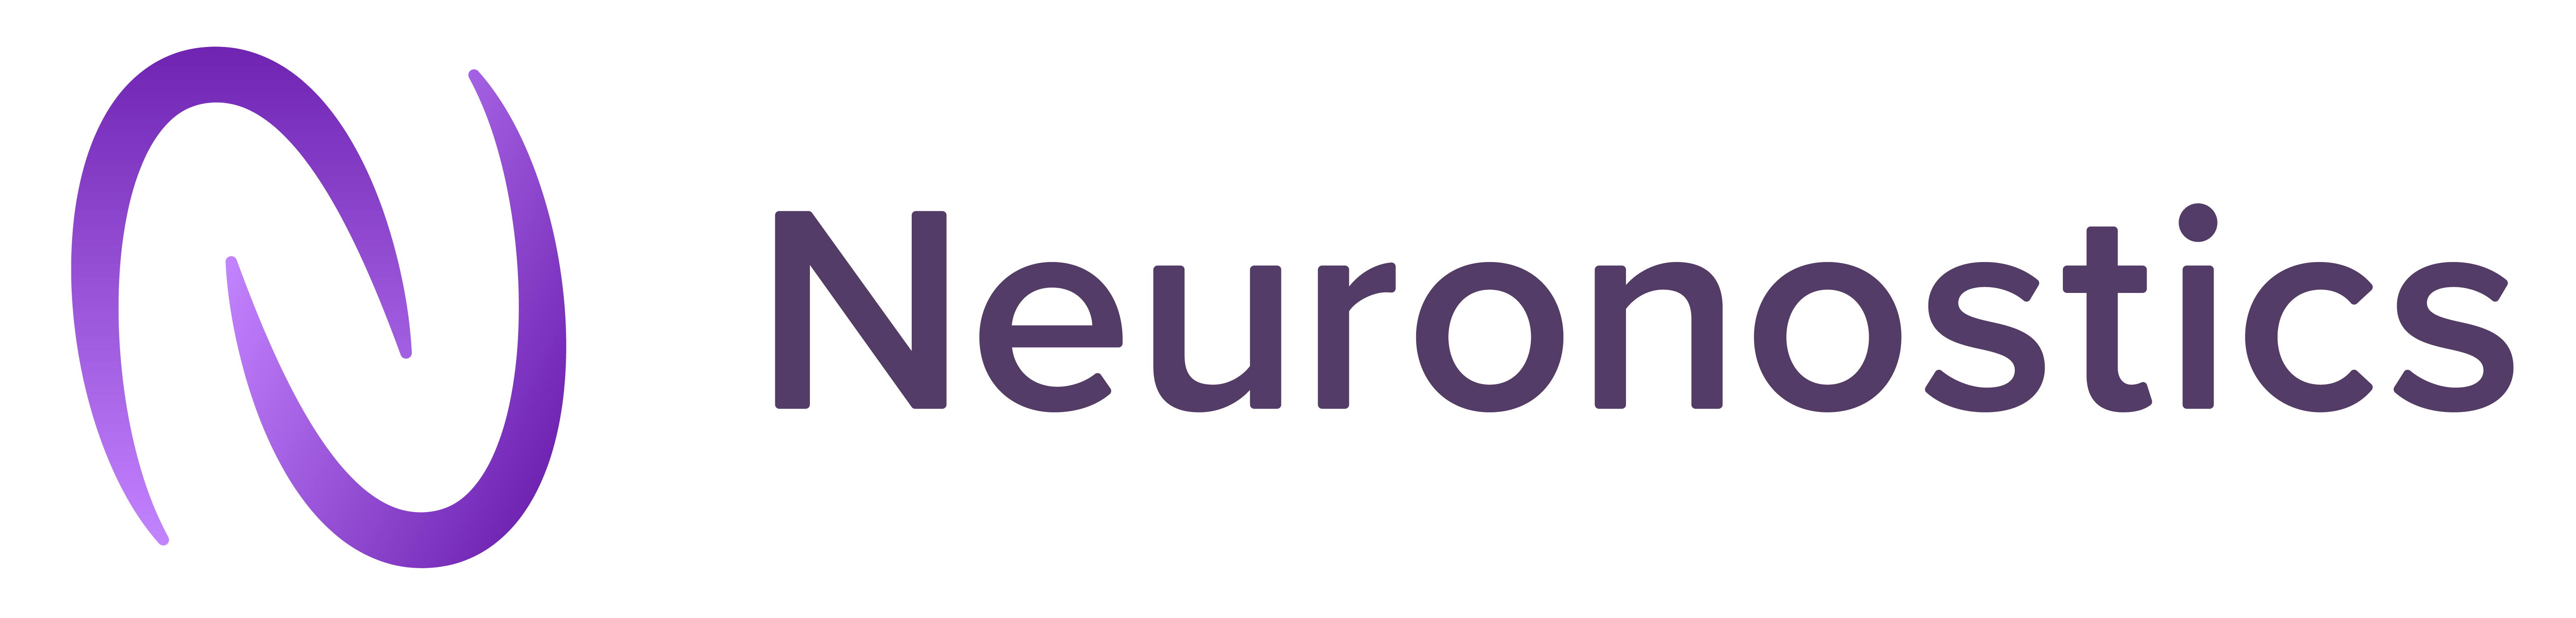 Neuronostics company logo